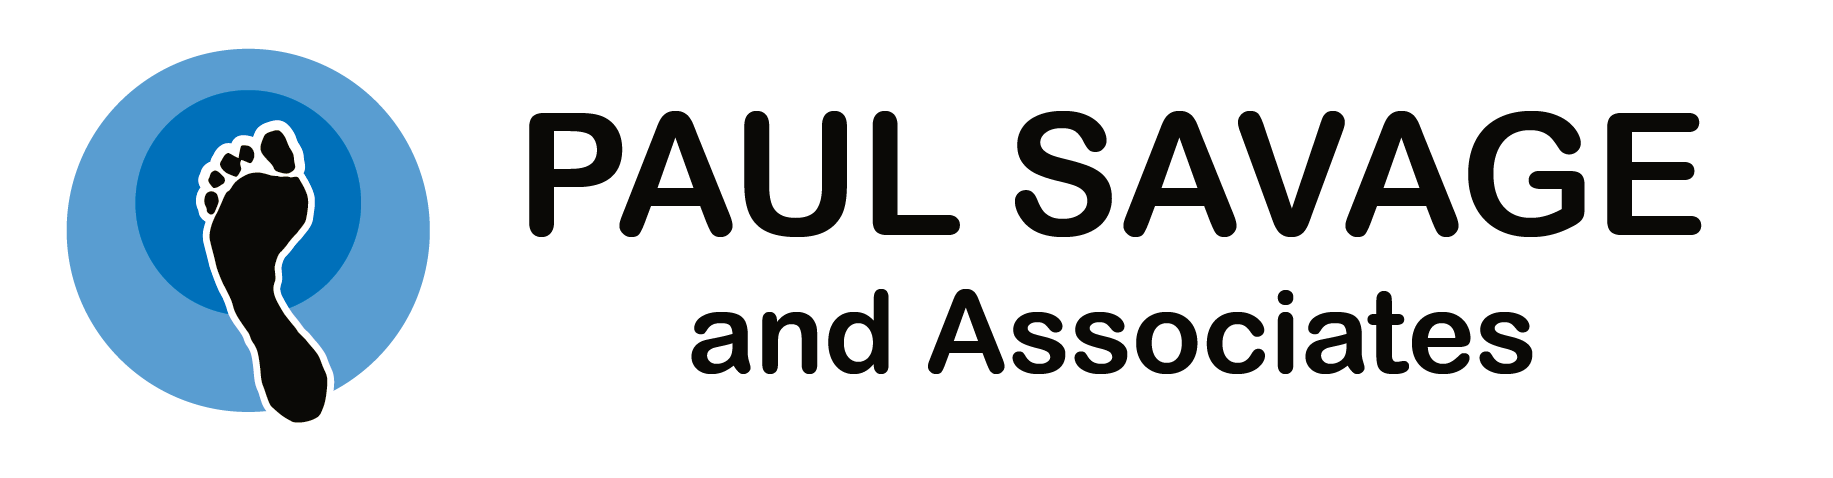 Paul Savage and Associates logo